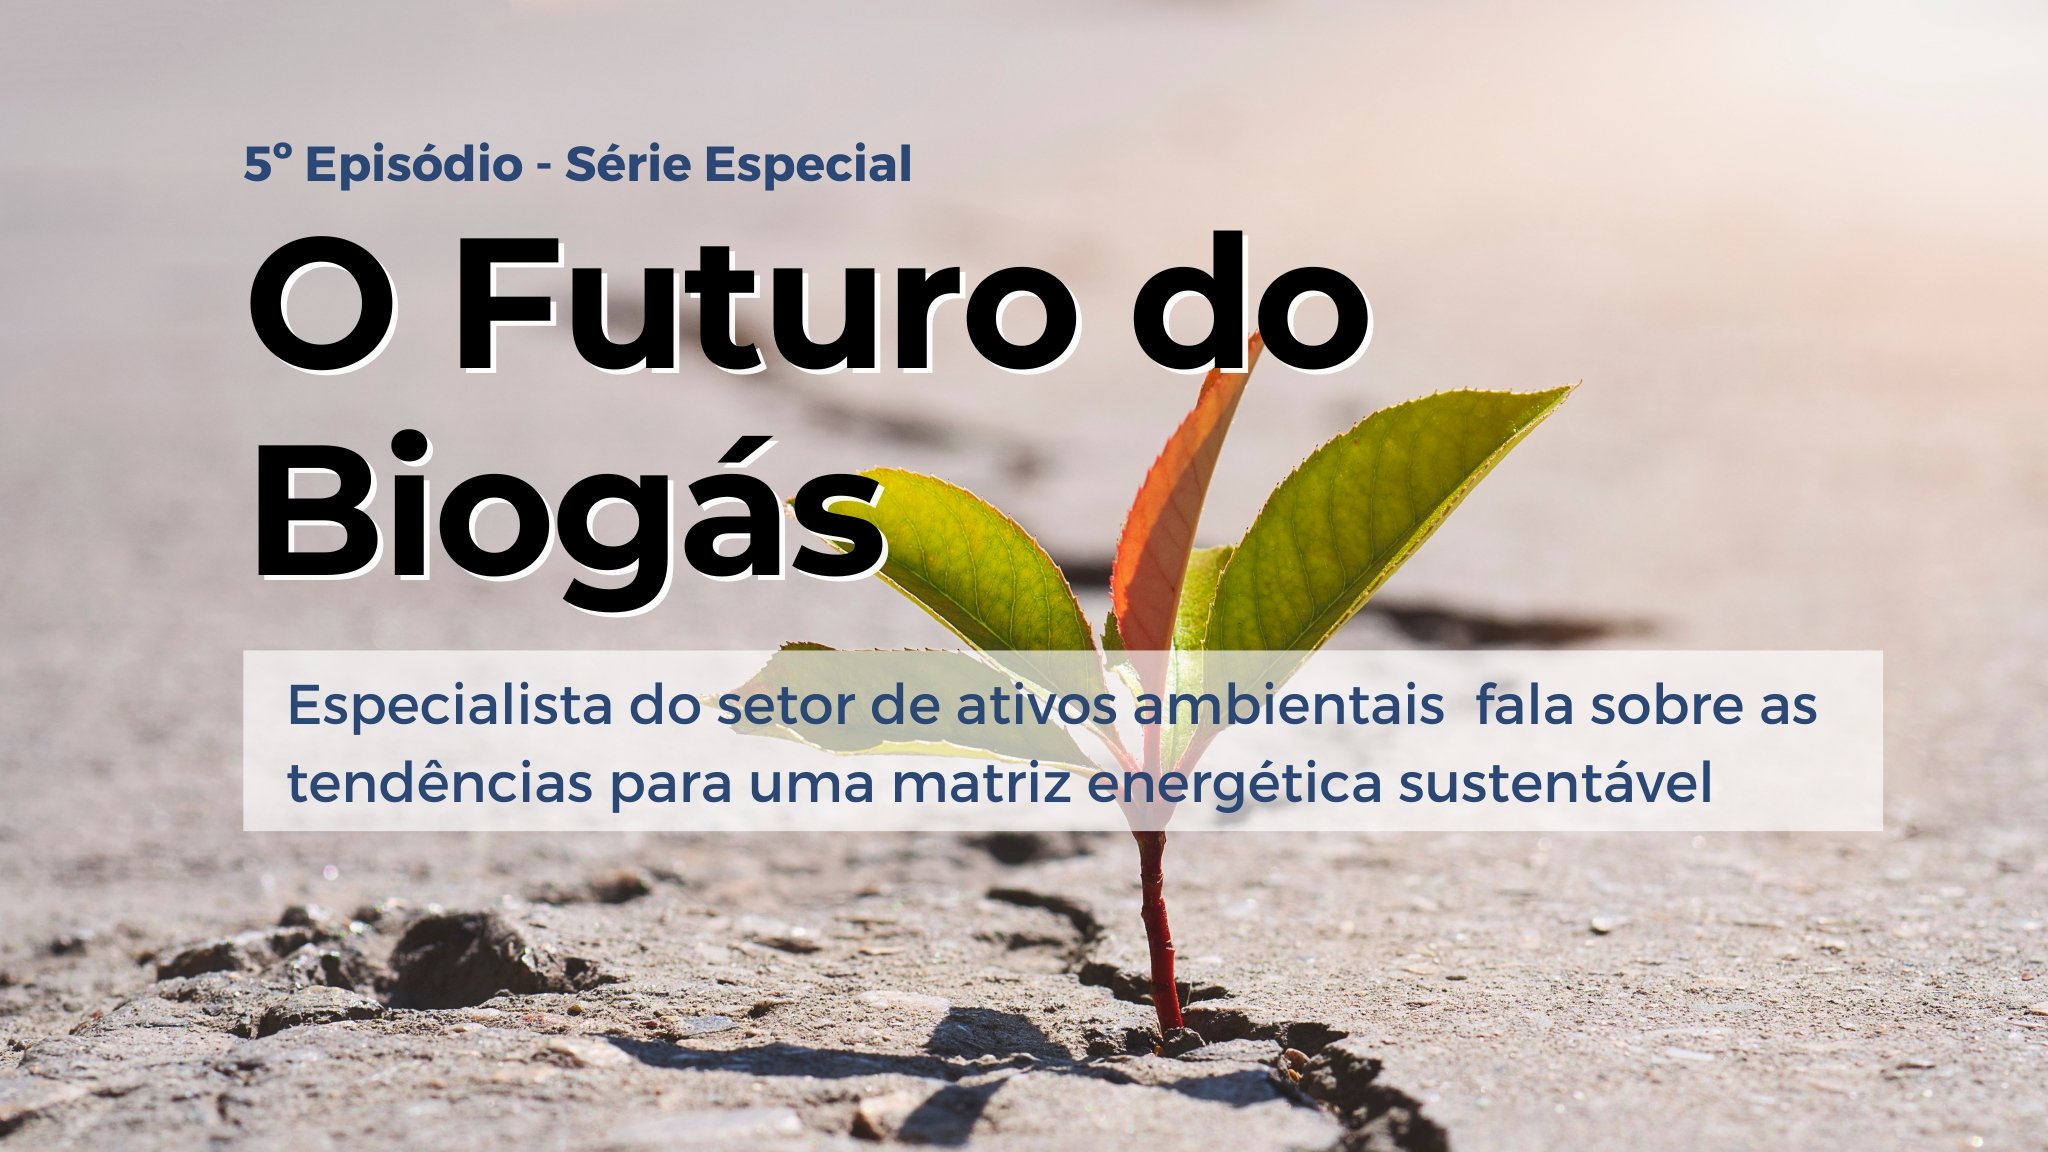 I-REC DAY BRAZIL - Portal Energia e Biogás